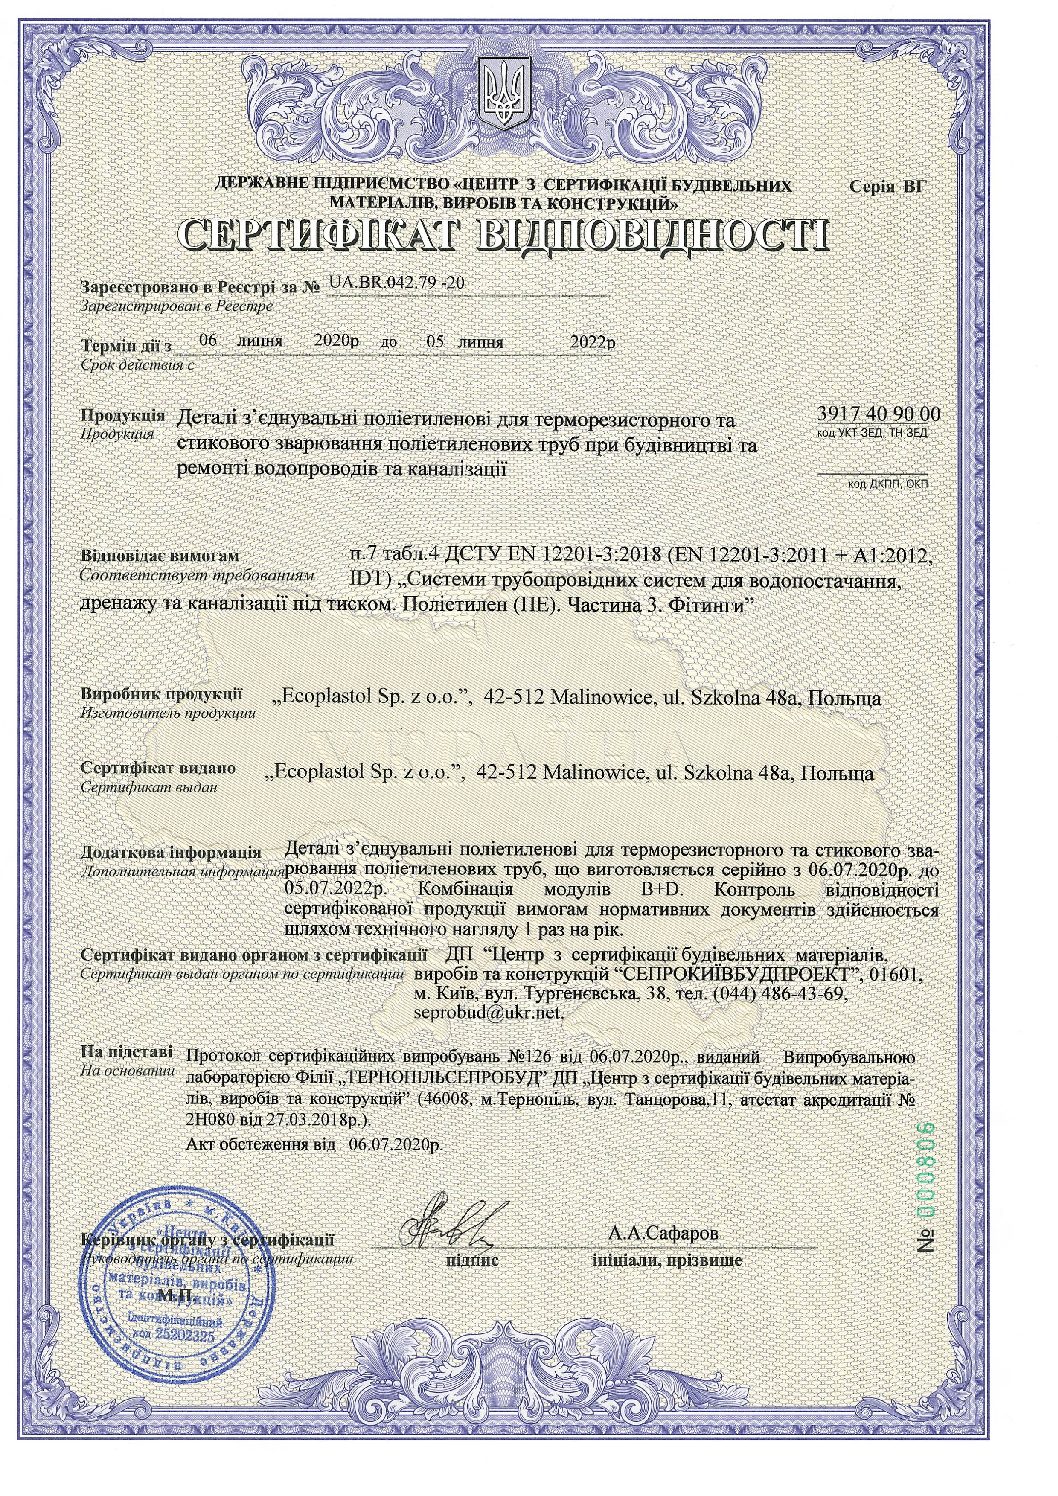 Ukraine Certificate